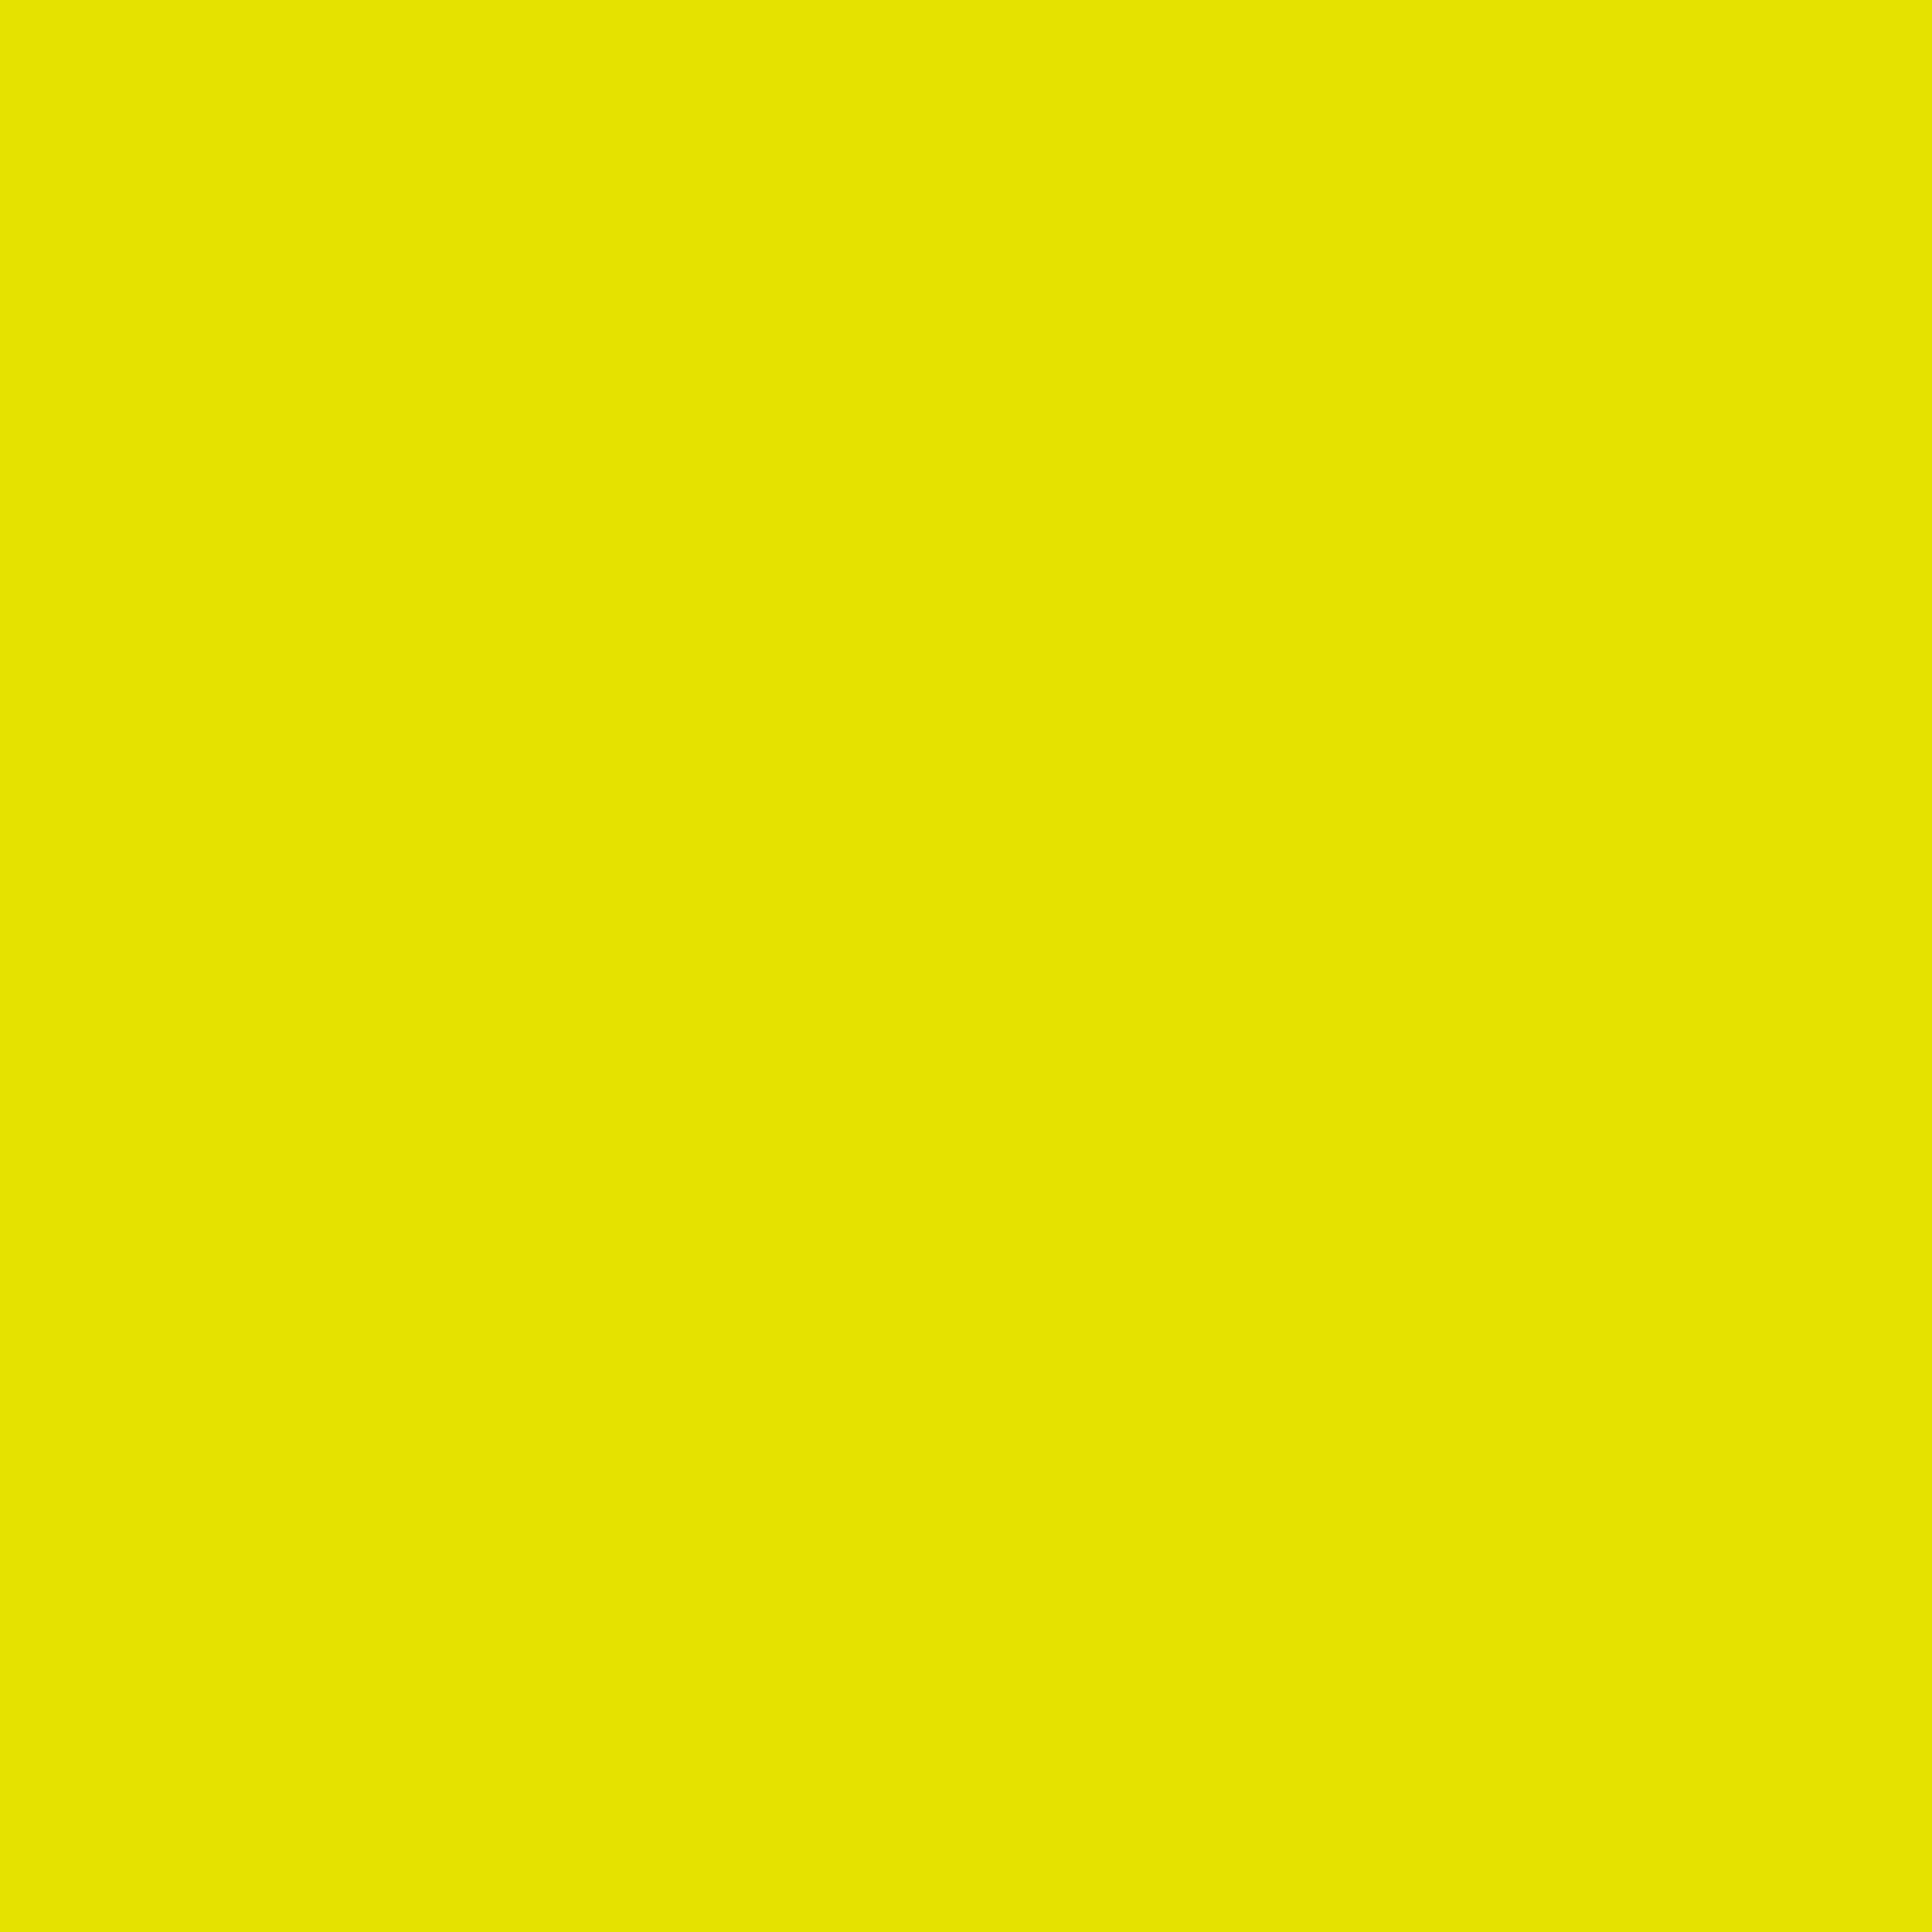 Sharpie Clear View Highlighters 4/Pkg-Yellow, Pink, Orange & Green, 1 -  Harris Teeter